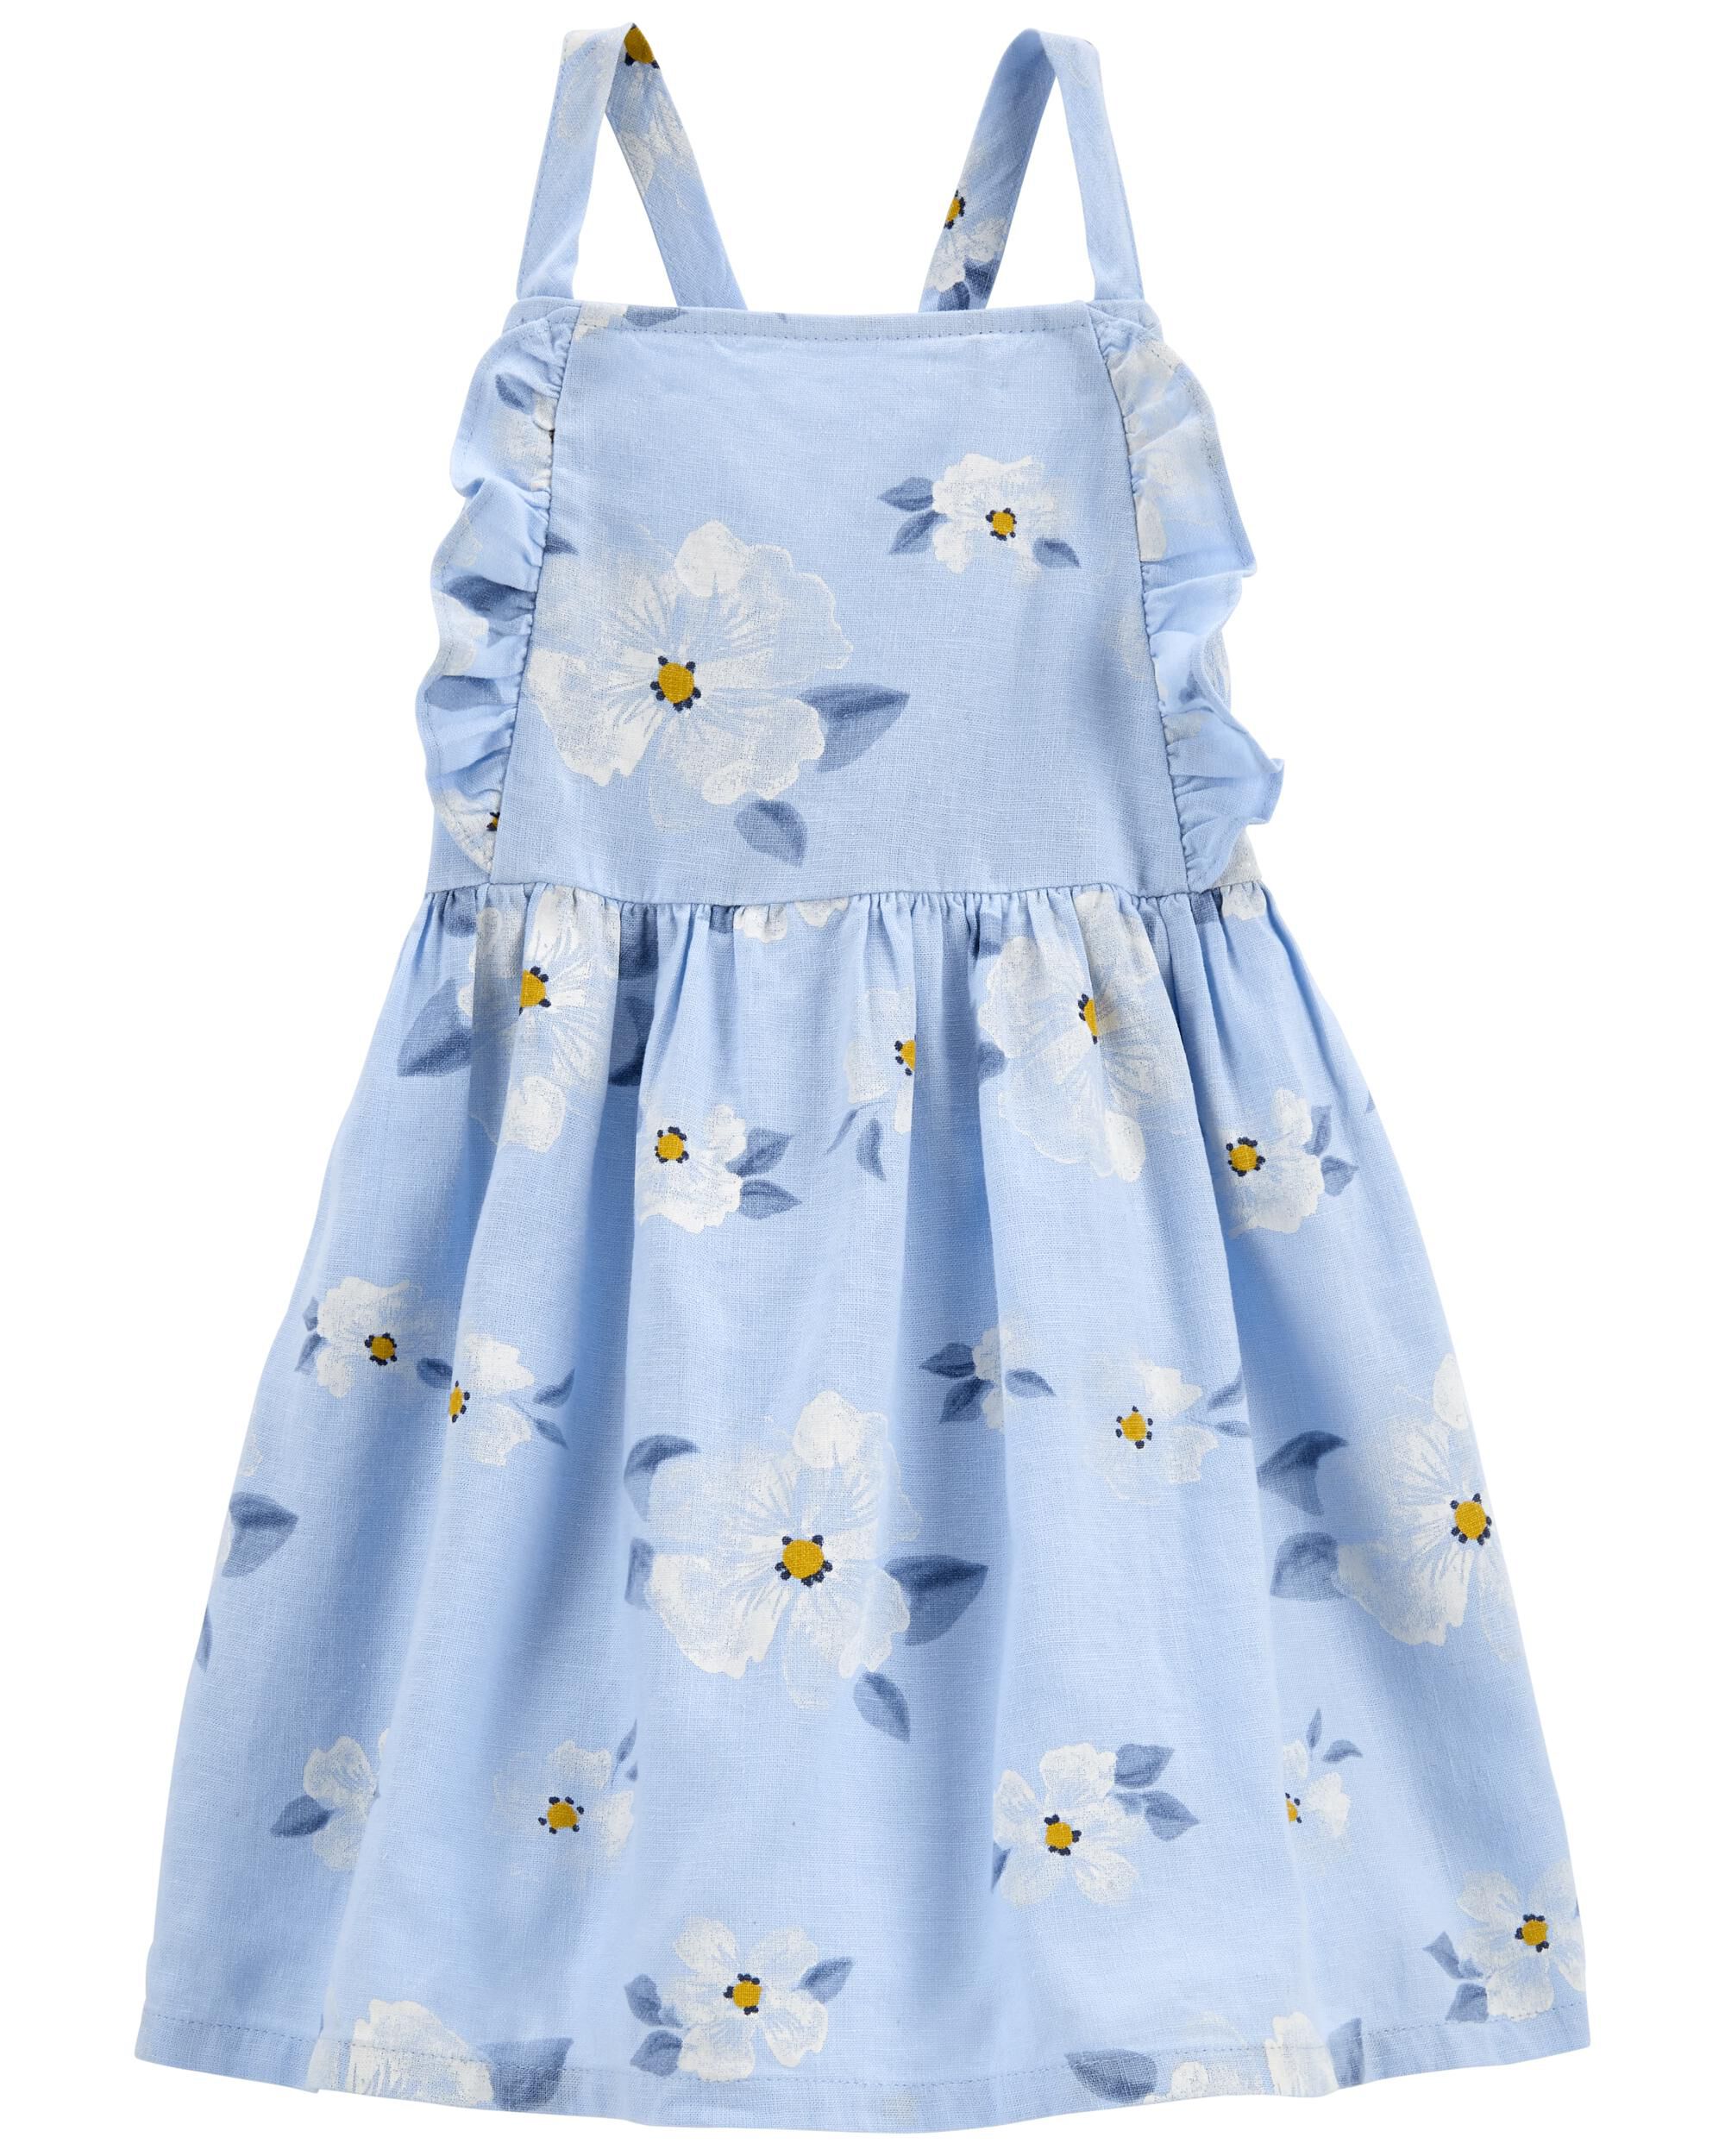 blue dress size 2-3 years dress with pockets Linen dress daisy dress